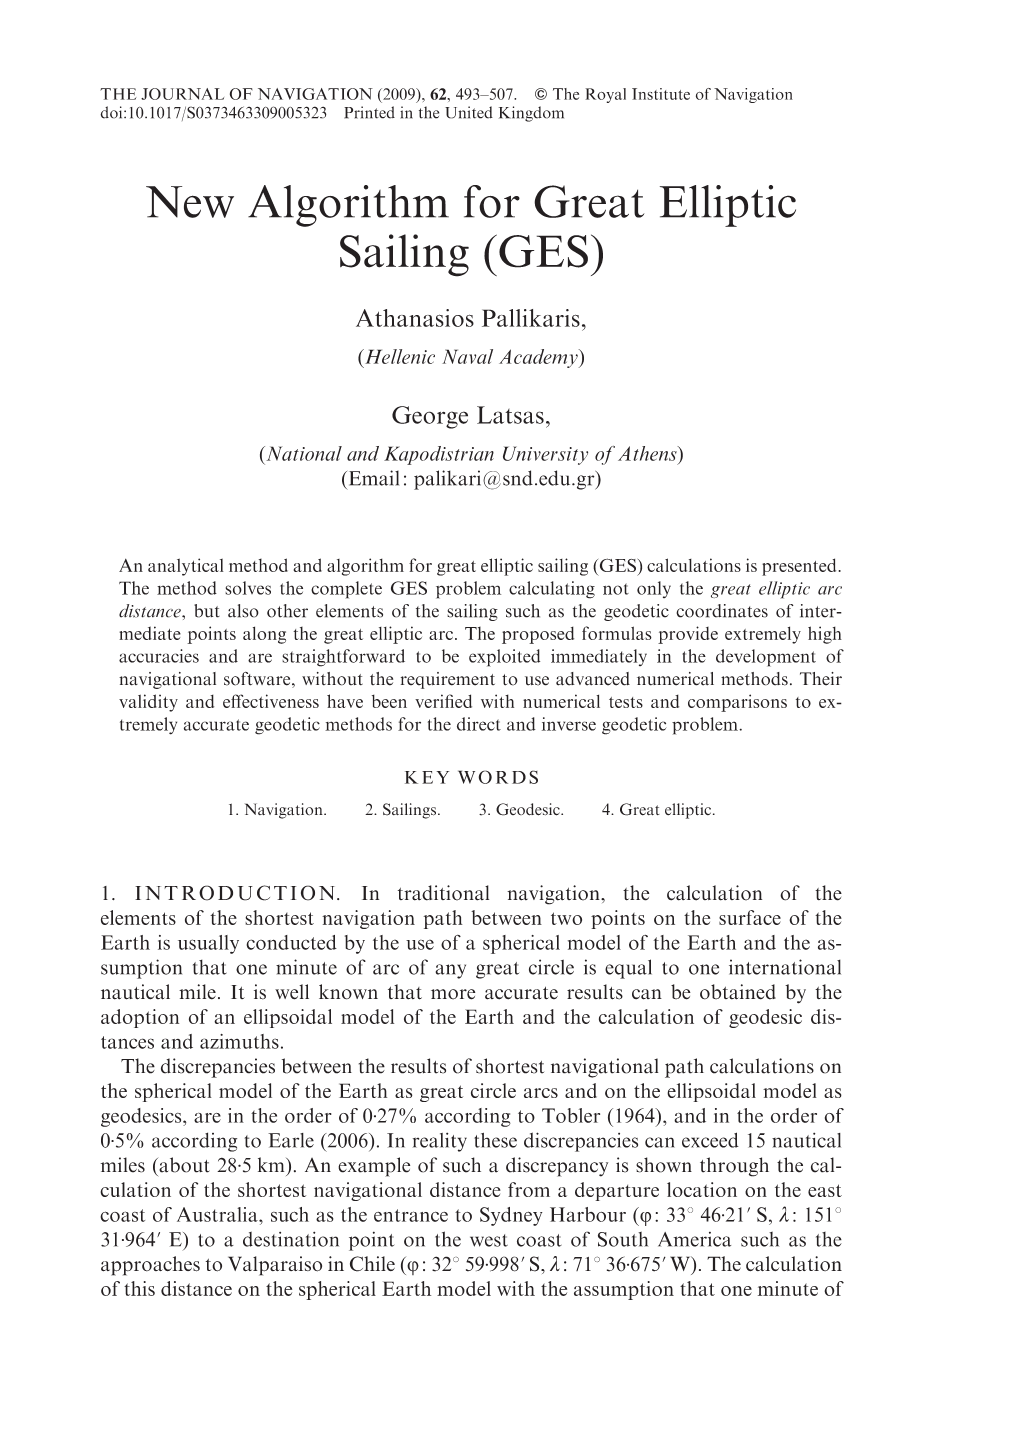 New Algorithm for Great Elliptic Sailing (GES)